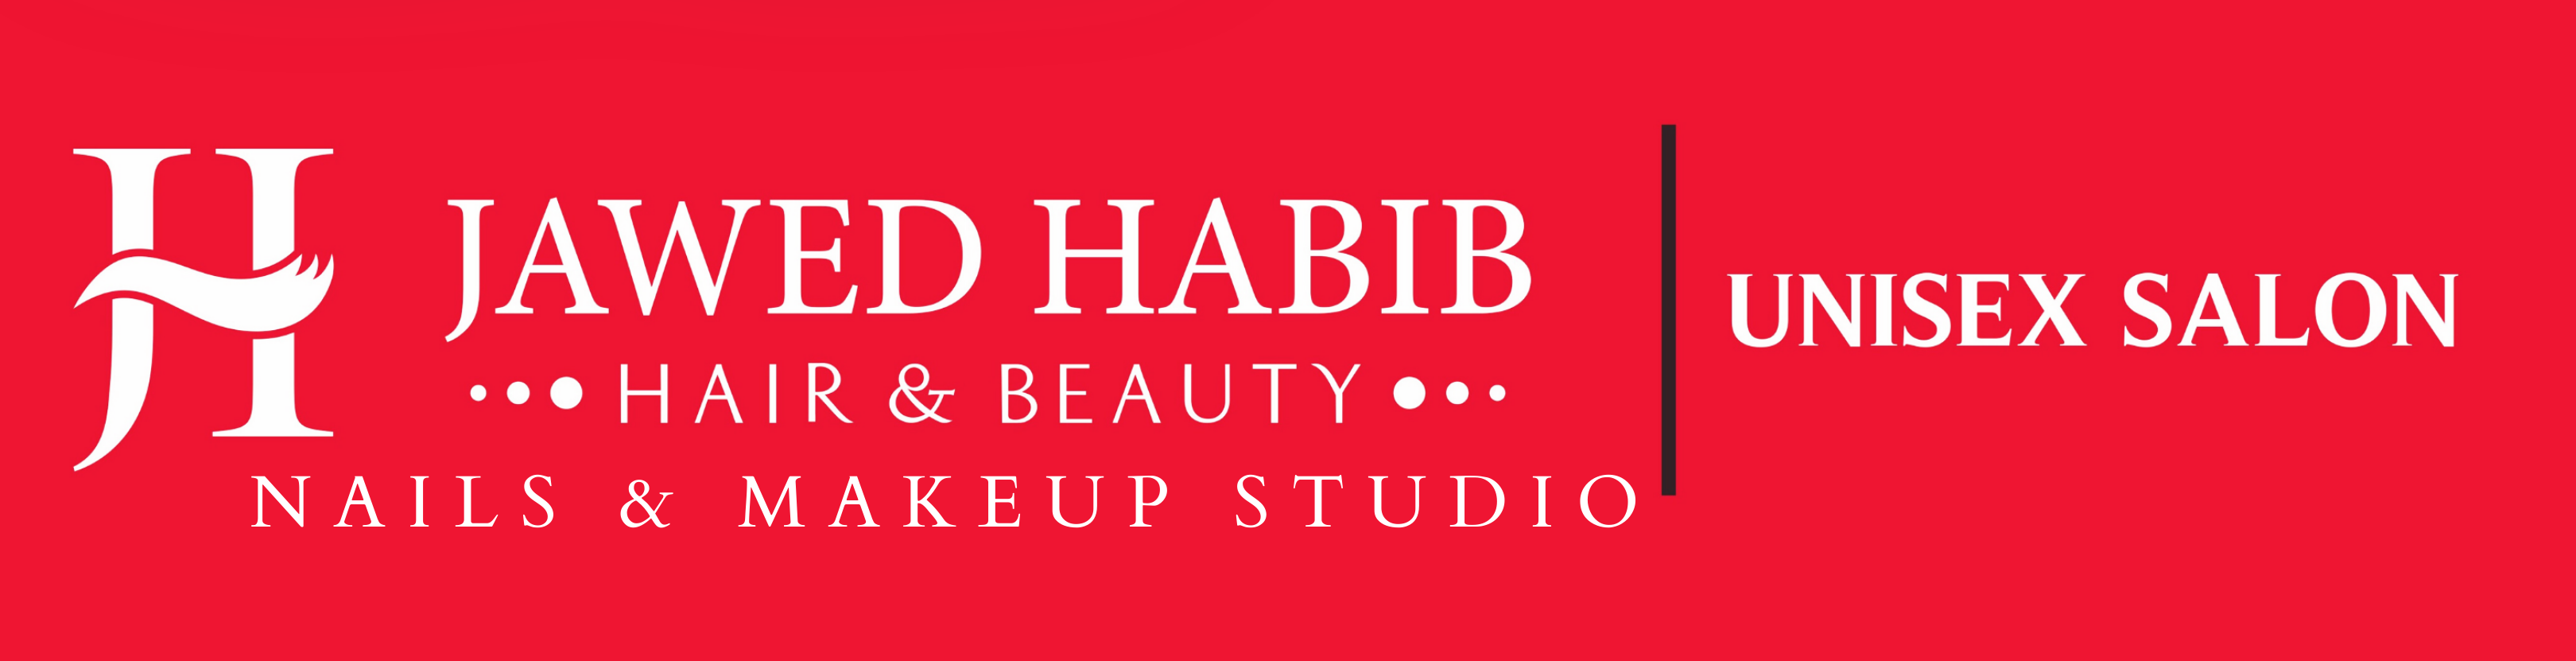 keratin-treatment-offers – Jawed Habib Hair & Beauty Salon